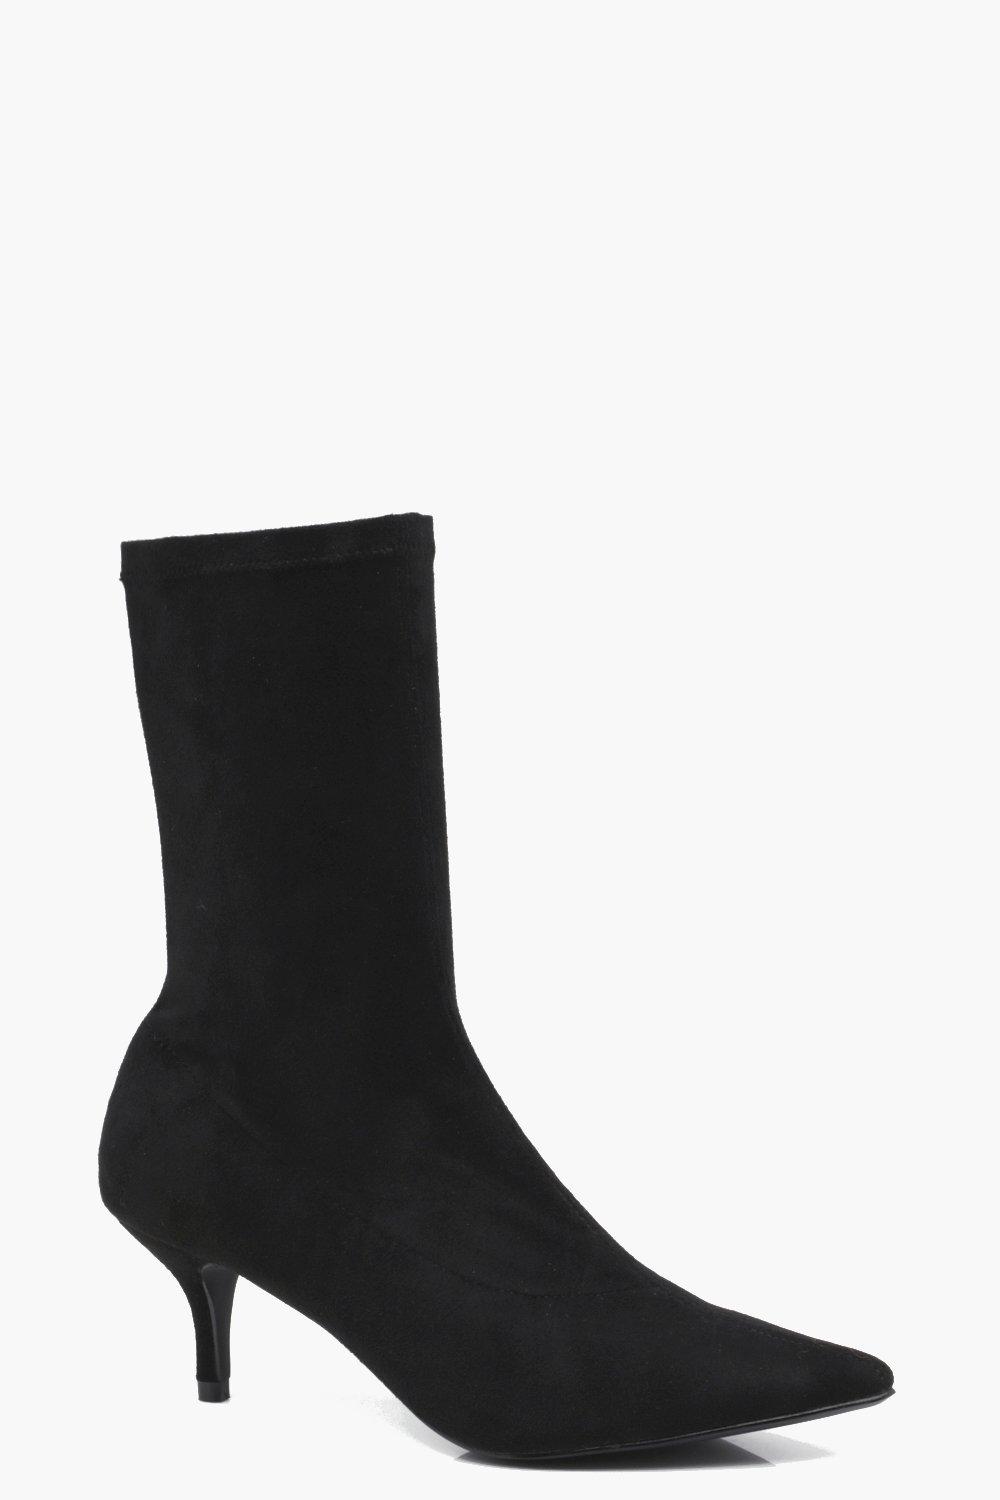 black sock boot kitten heel